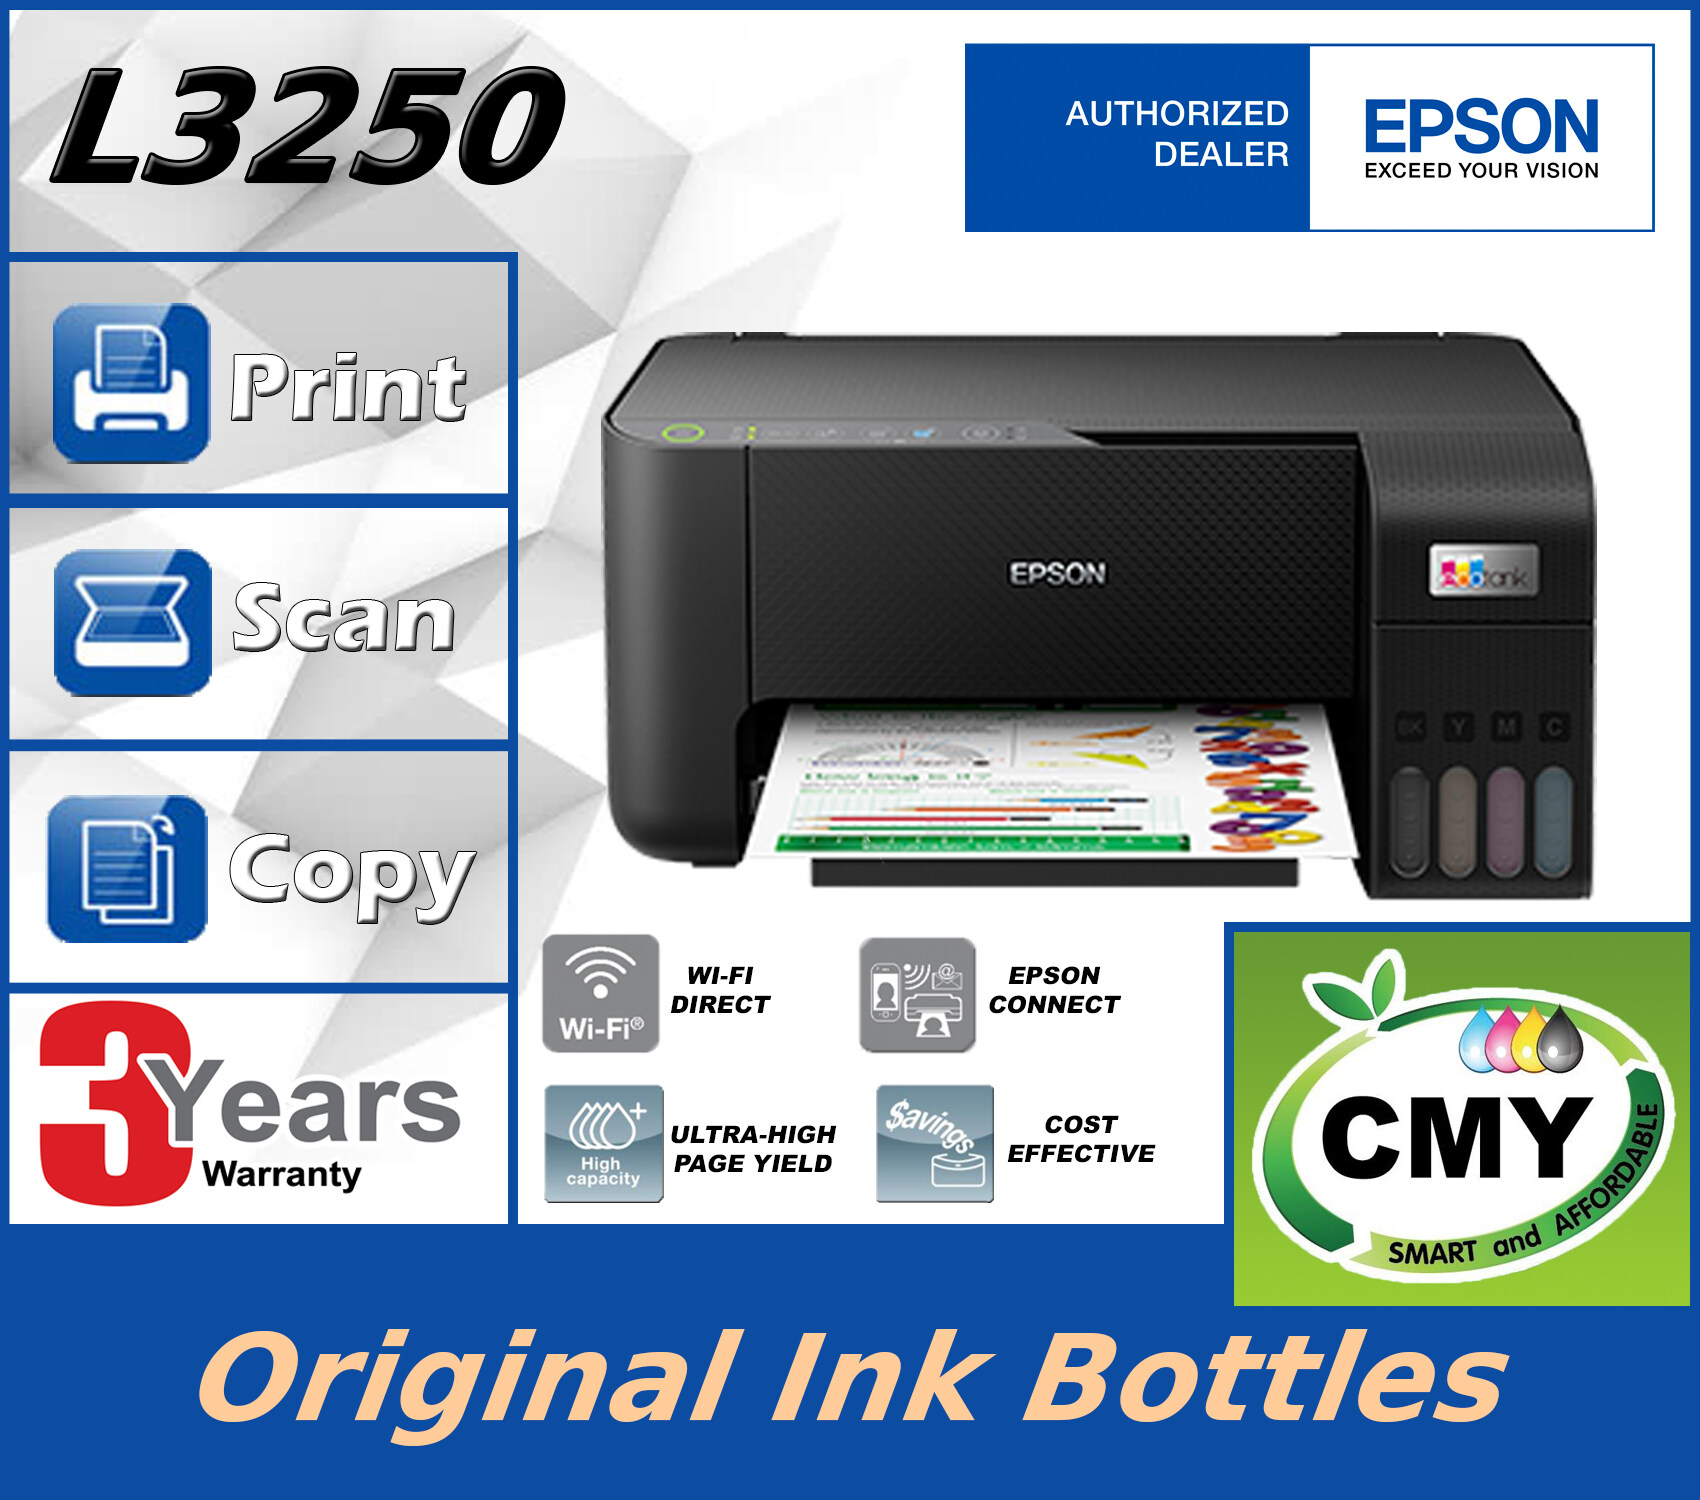 Epson EcoTank L3250 4-In-1 Pint Scan Copy WIFI Refillable Ink Tank Printer AIO Multi-Function Color Printer replace L3150 same as L3156 L3256